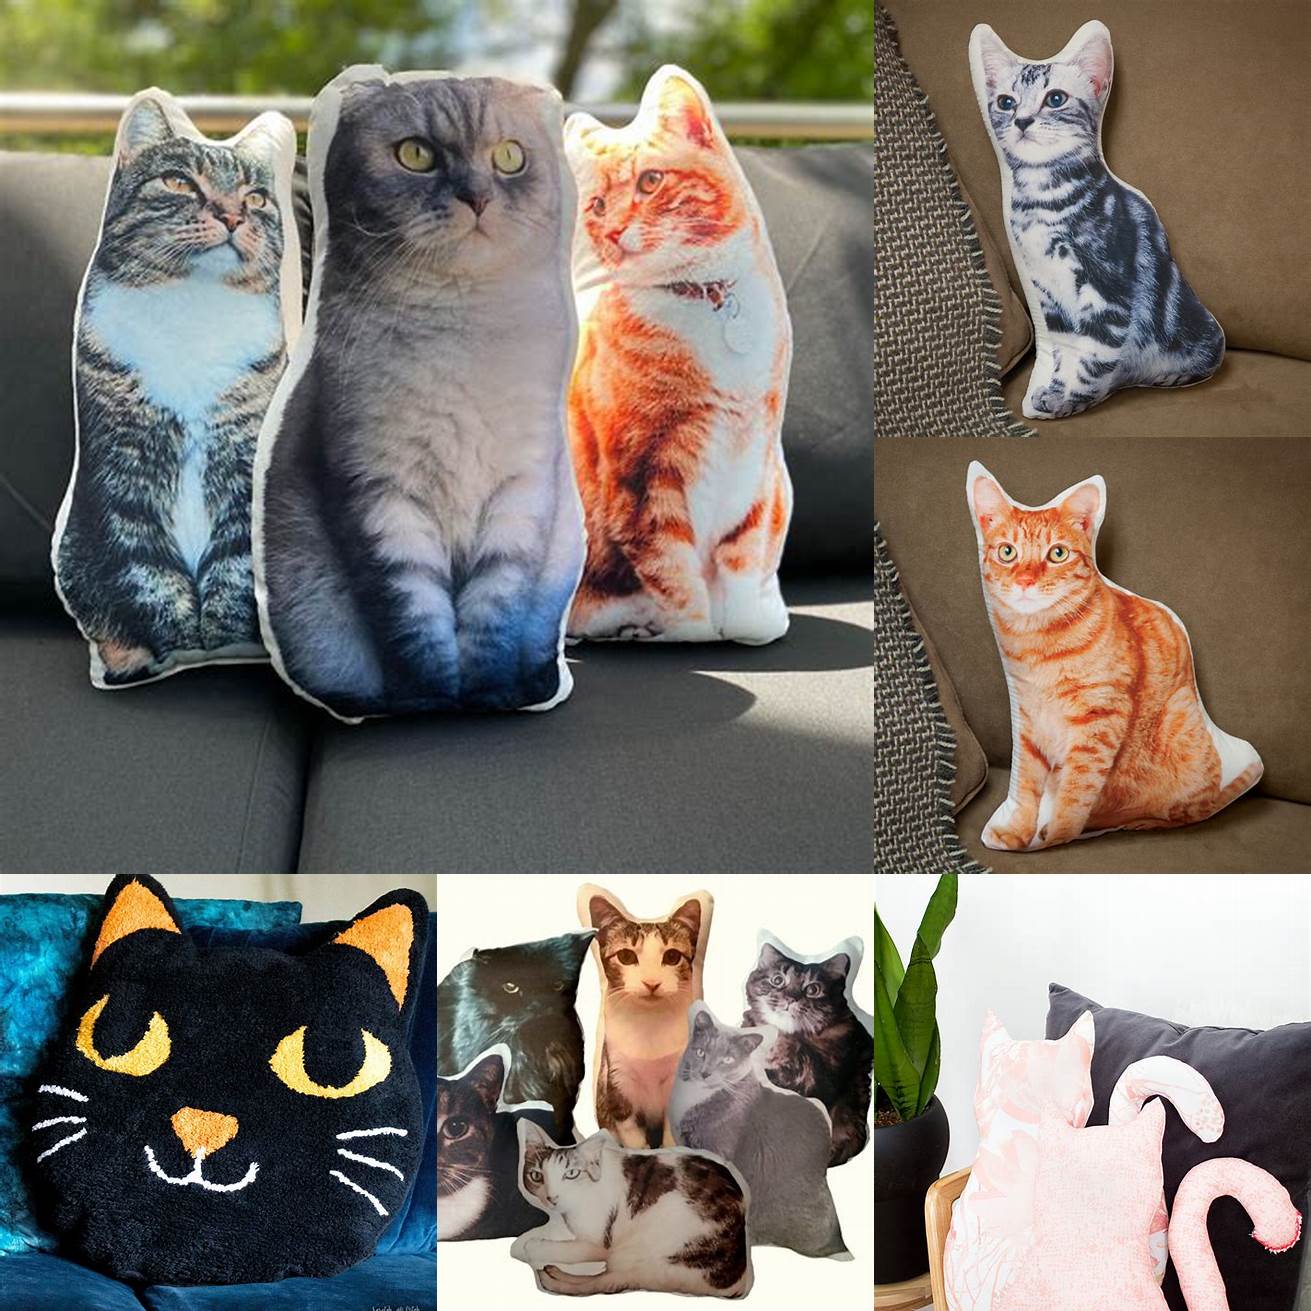 Cat-Shaped Pillows